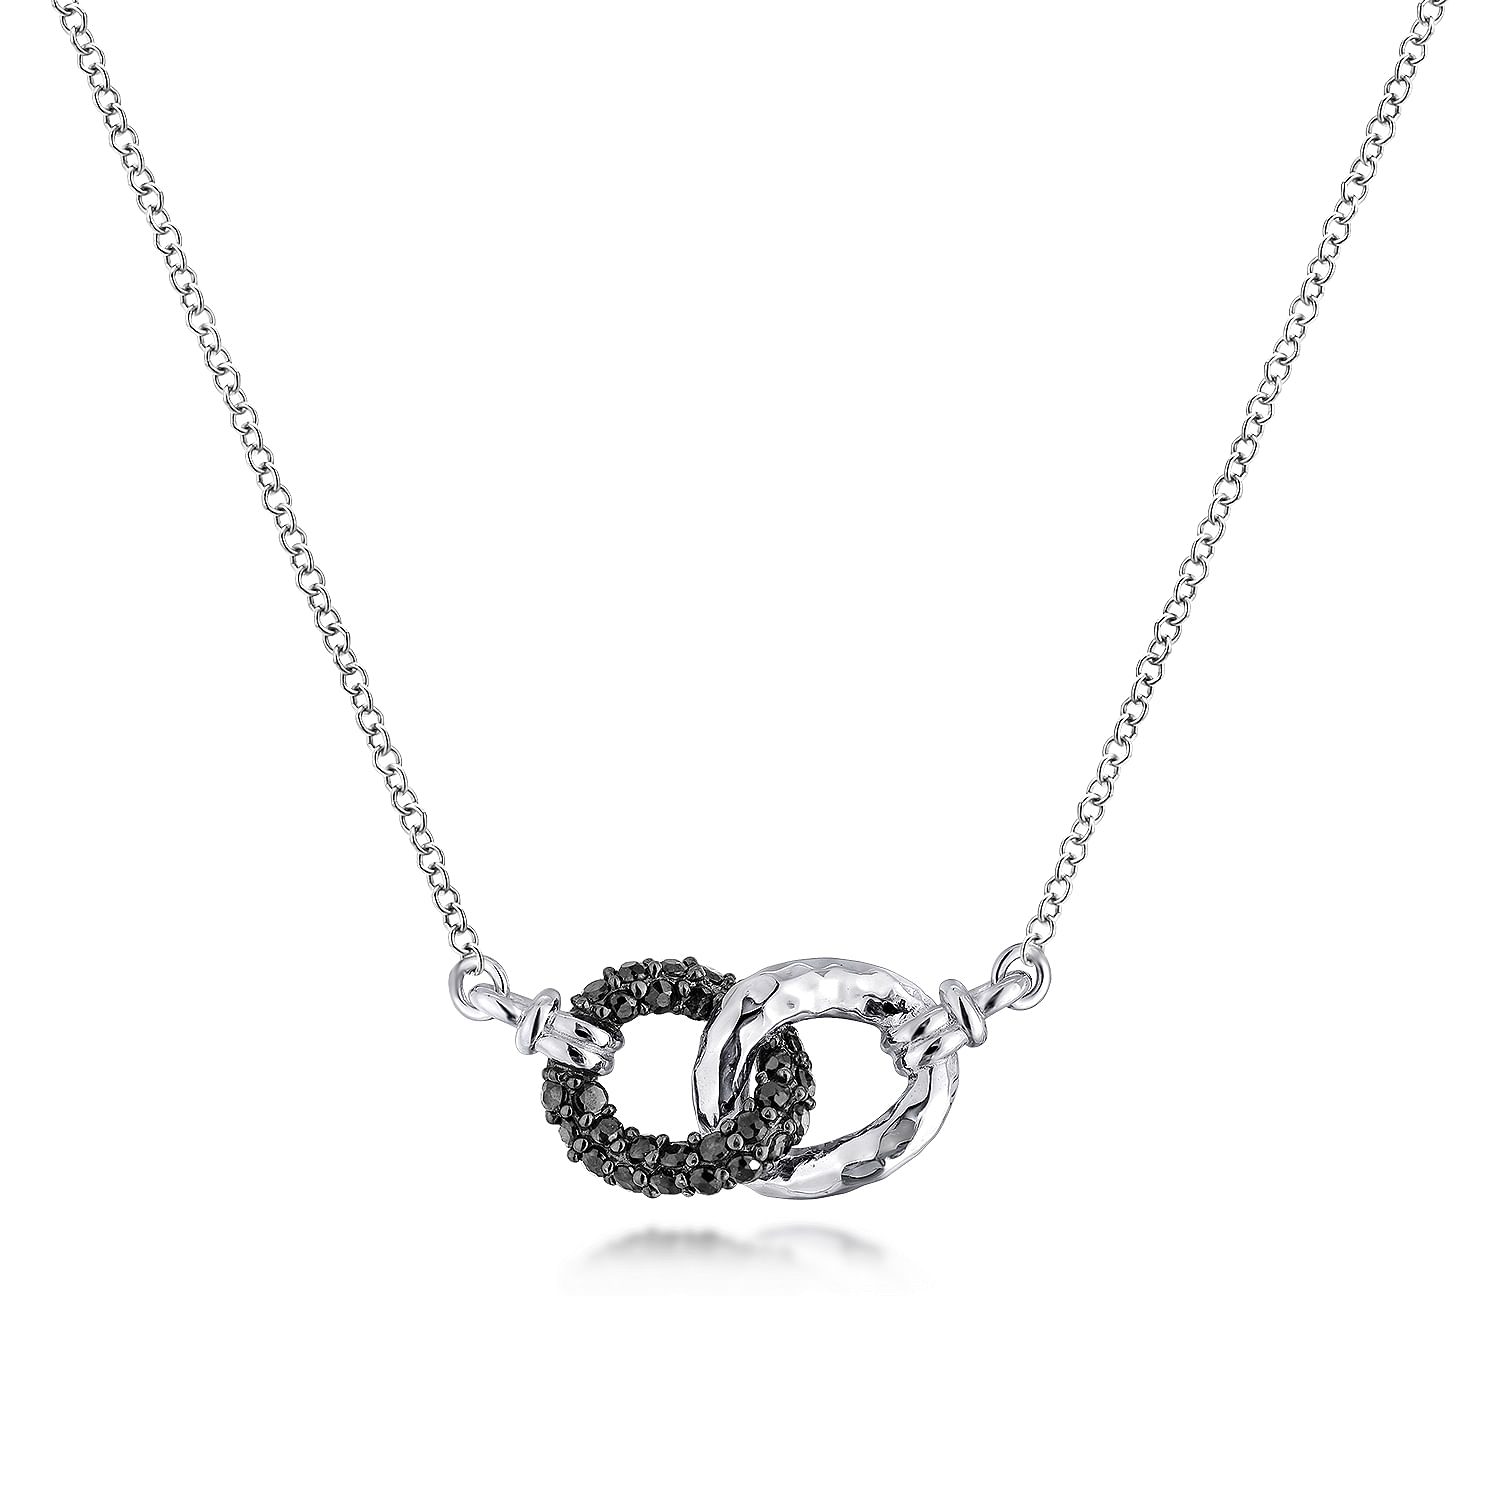 Gabriel - 925 Sterling Silver and Black Spinel Interlocking Links Necklace